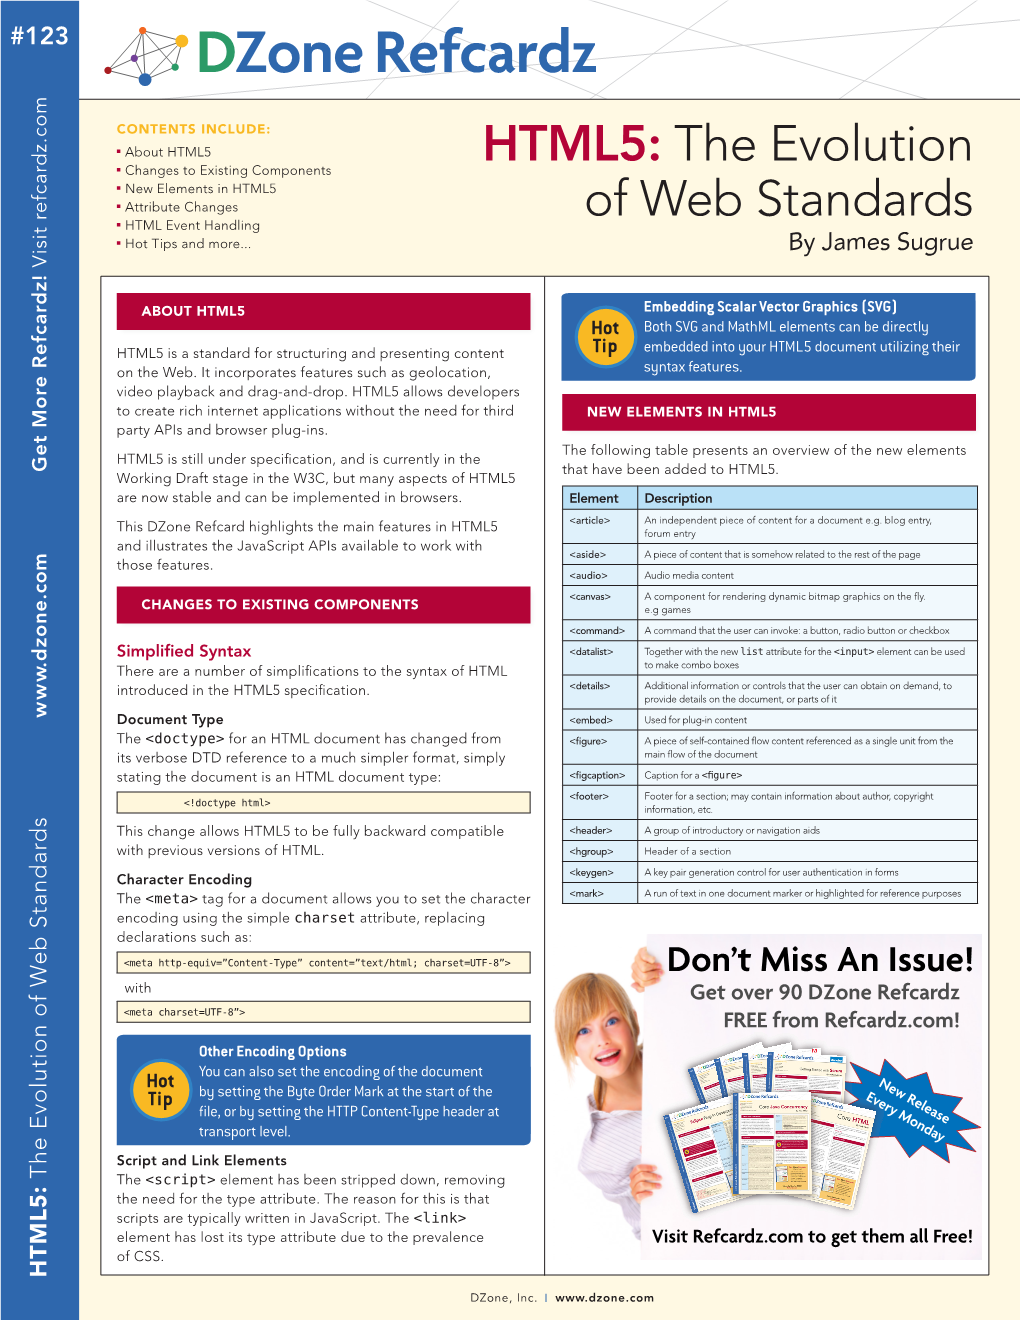 HTML5: the Evolution of Web Standards